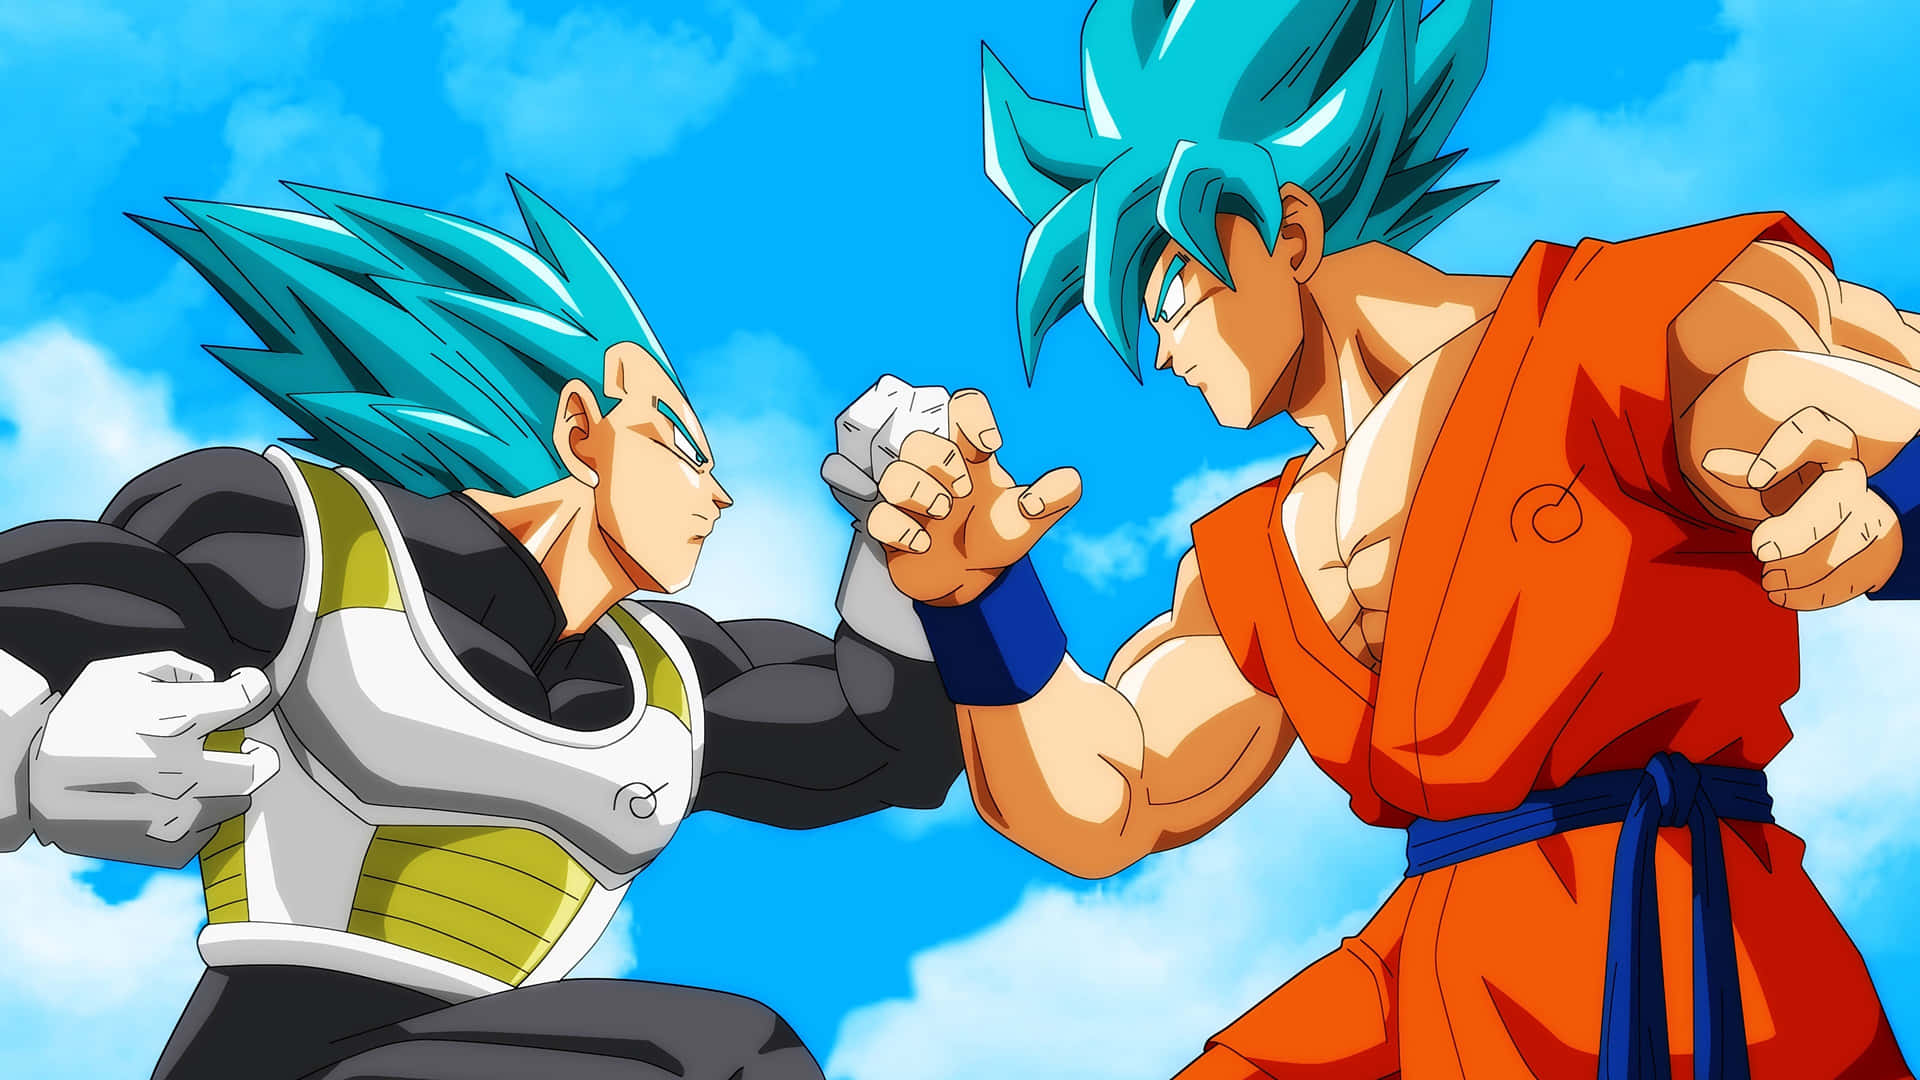 Imagemde Vegeta E Goku Lutando Juntos.